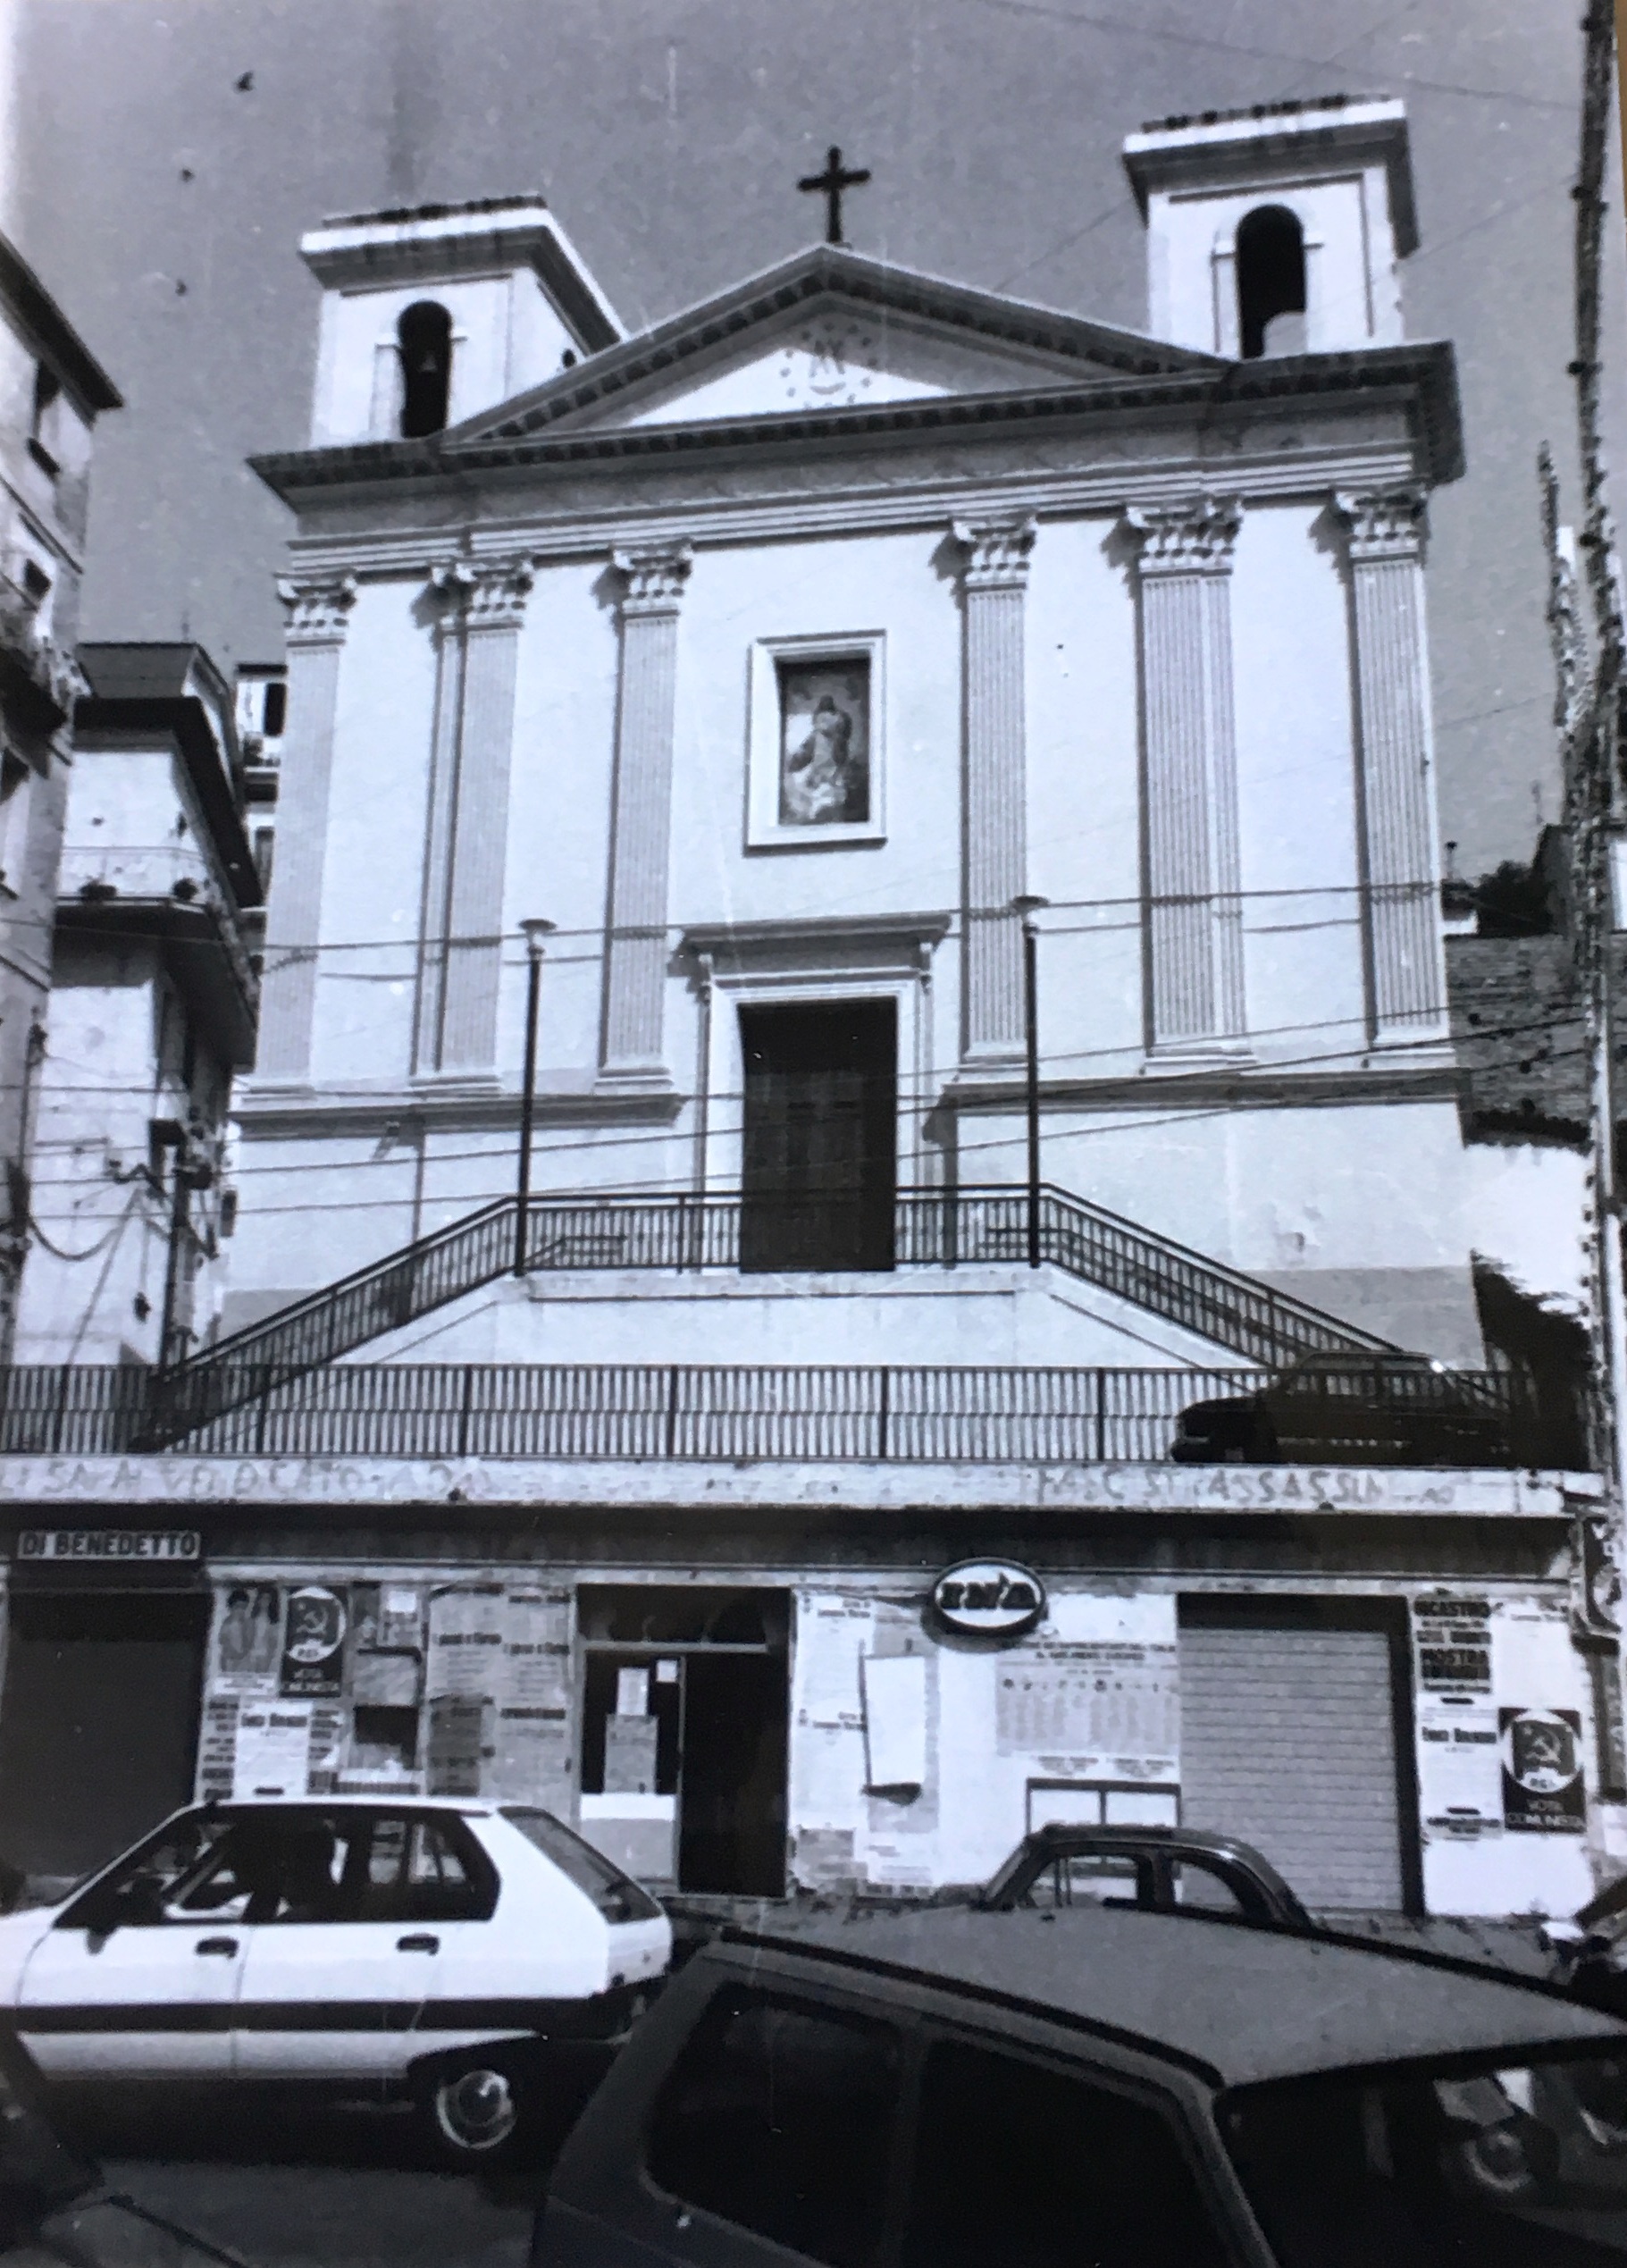 Chiesa di Santa Caterina (chiesa) - Lamezia Terme (CZ) 